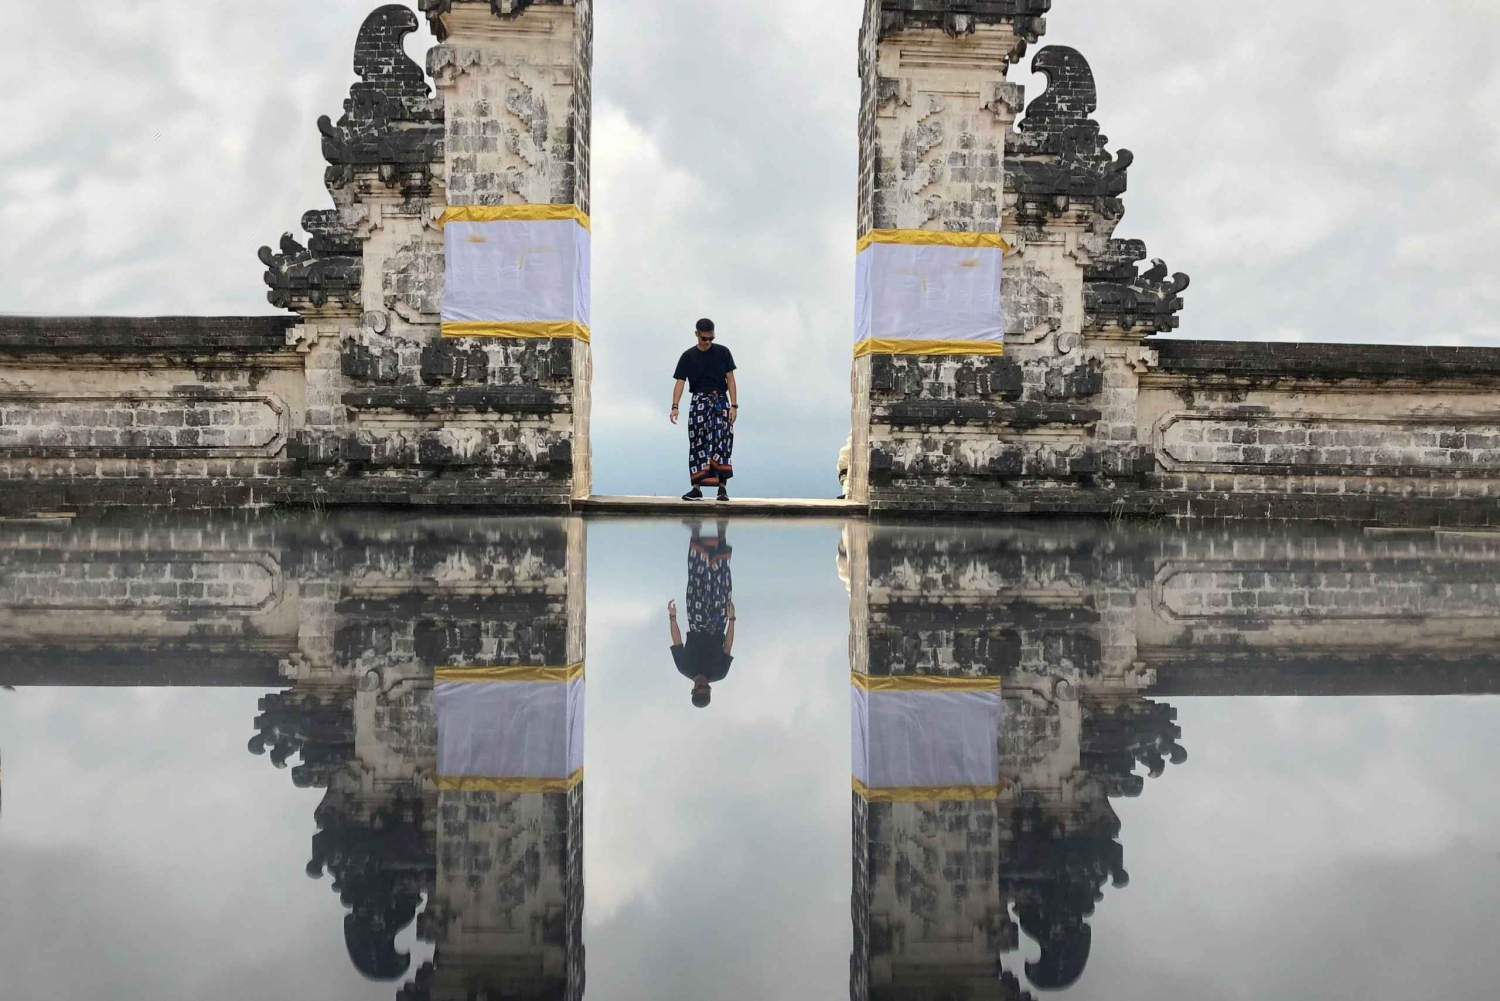 Lempuyang (Gate of Heaven) and East Bali